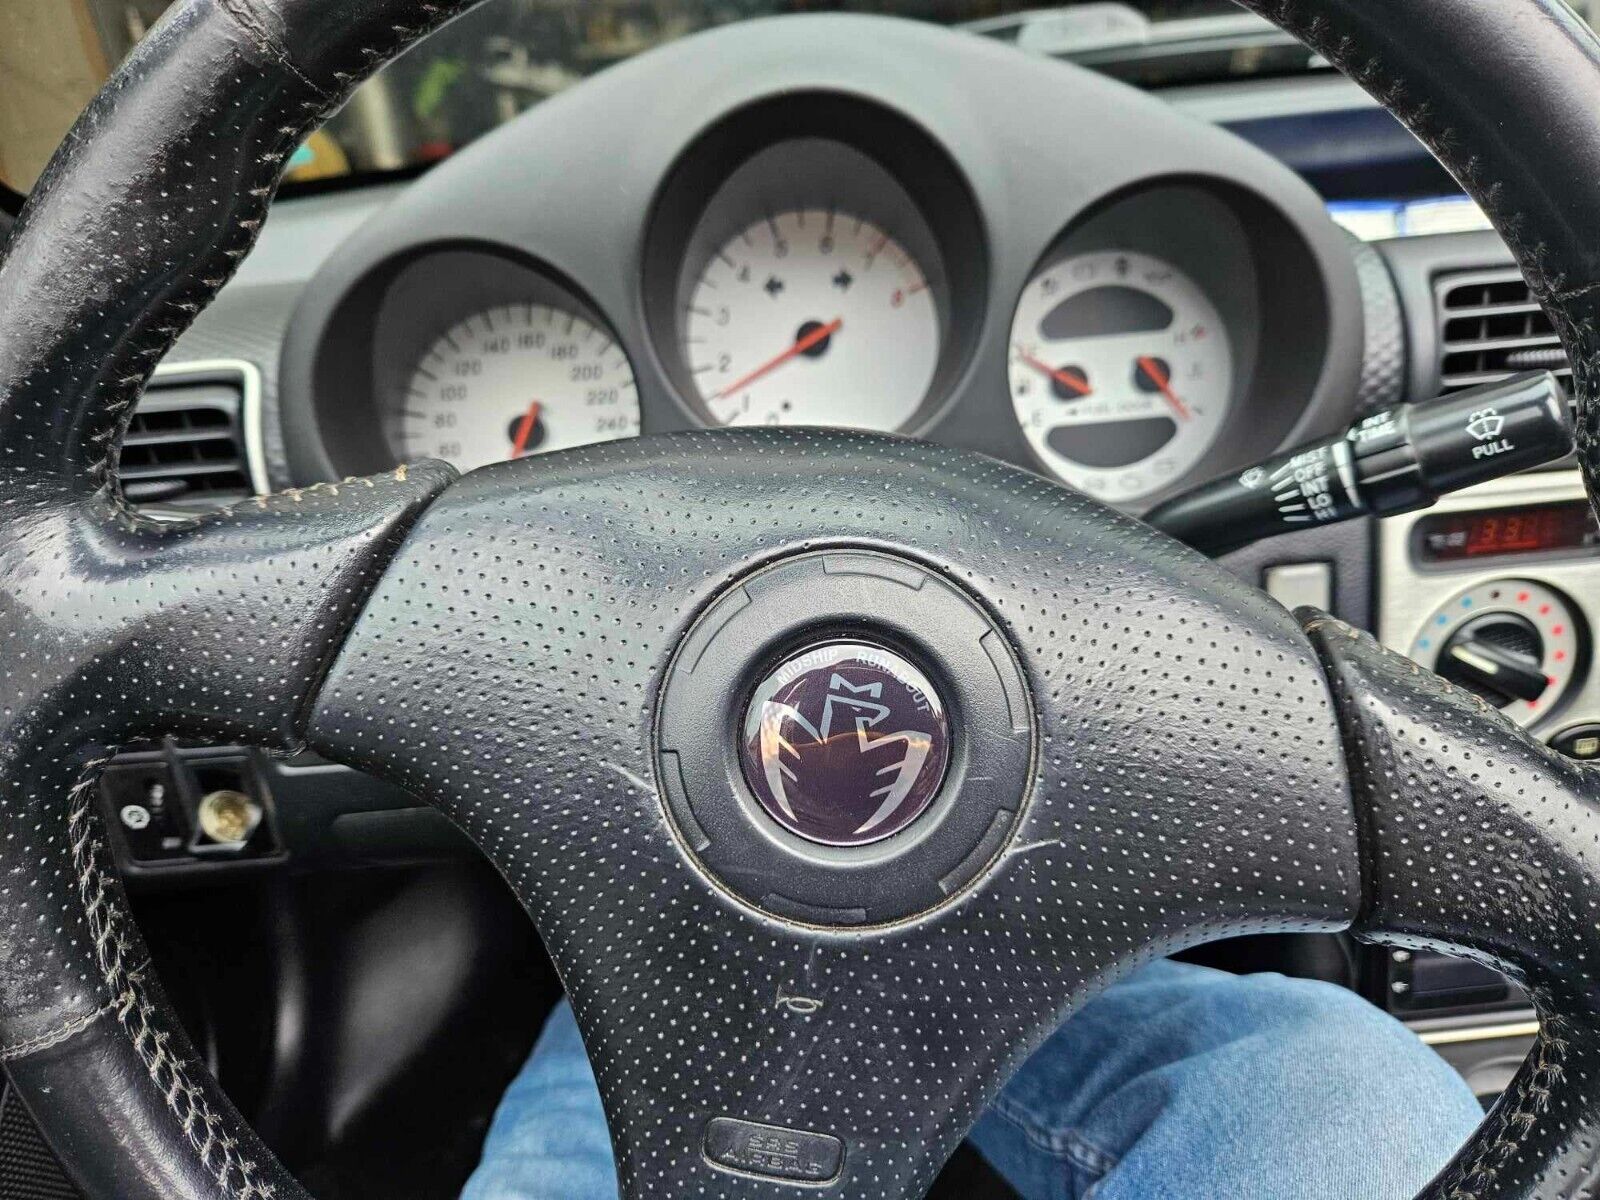 Toyota MR2 MK3 steering wheel badge, 3D gel, high quality